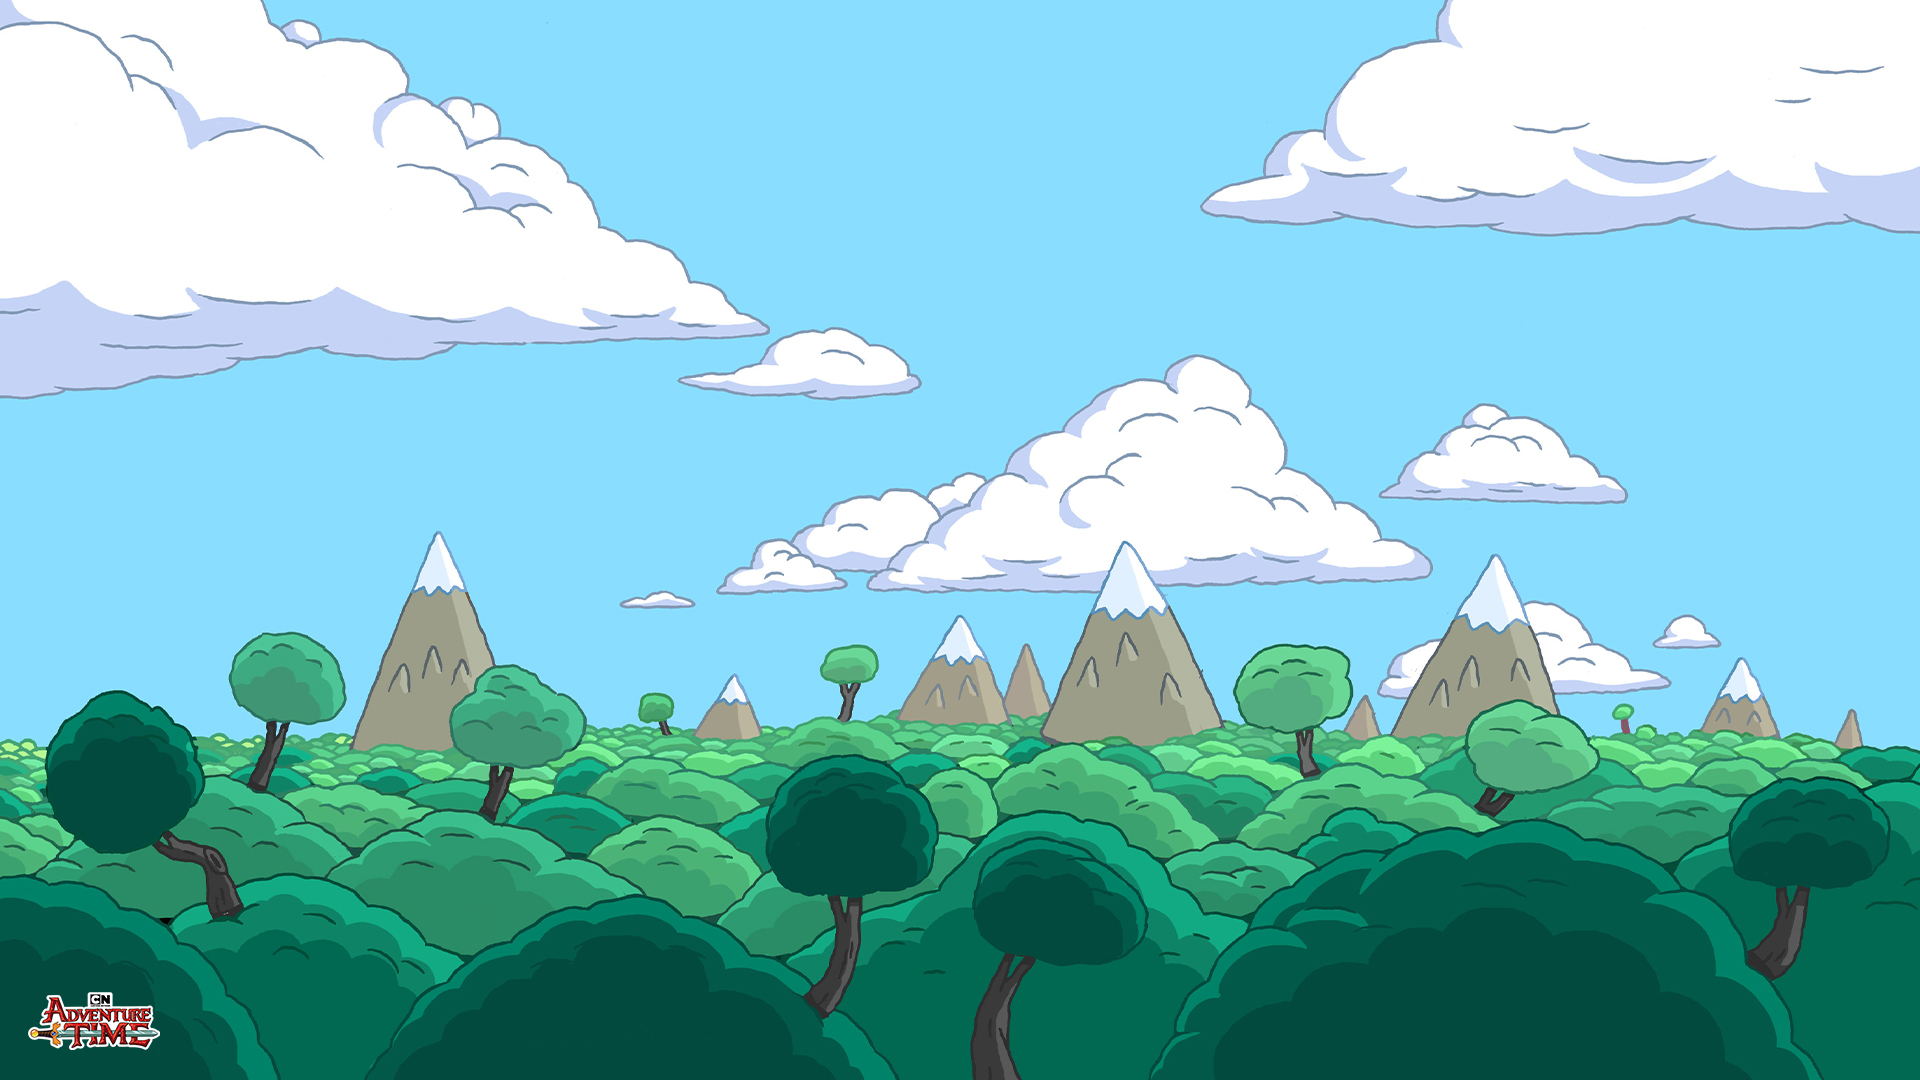 Cartoon Network: Backgrounds